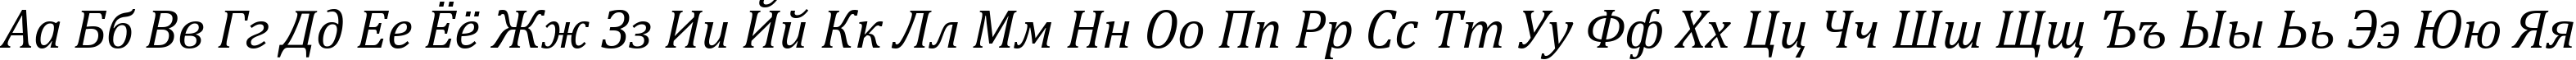 Пример написания русского алфавита шрифтом Cambria Italic